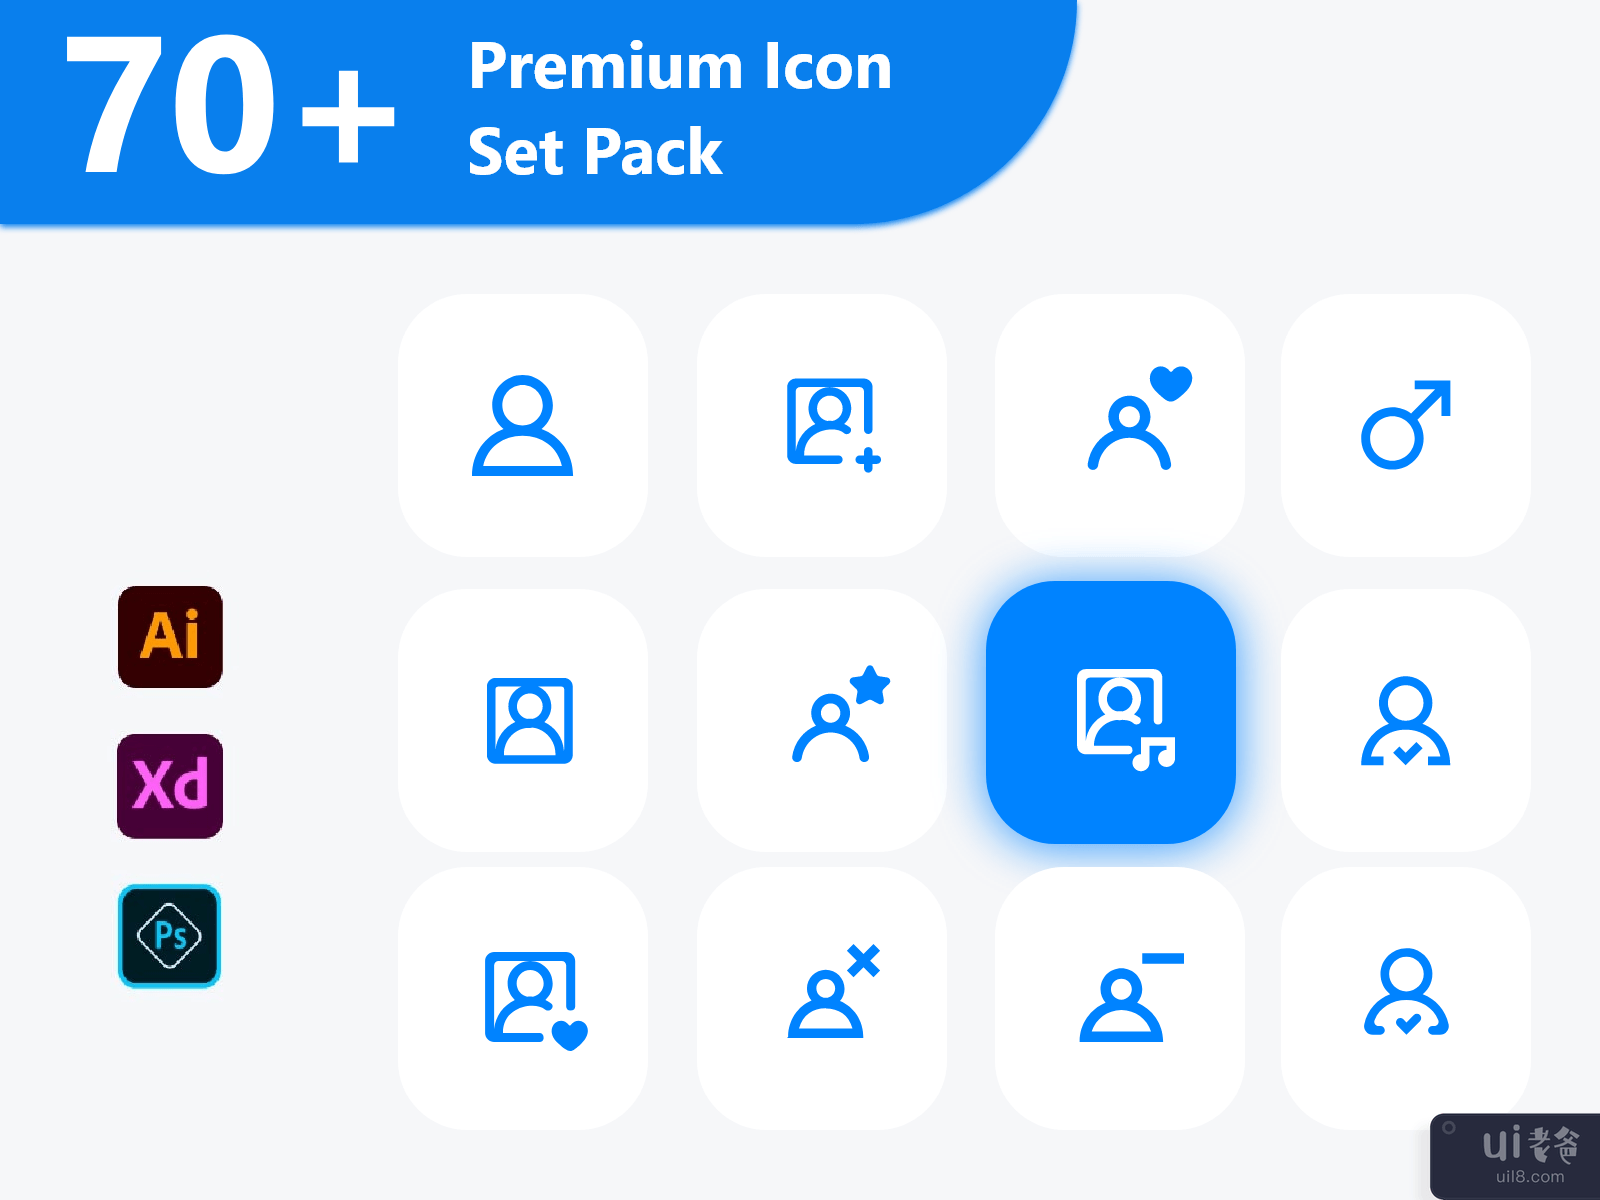 高级图标集包 v4 - 品牌标志图标集(Premium Icon Set Pack v4 - Brand Logo Icon Set)插图